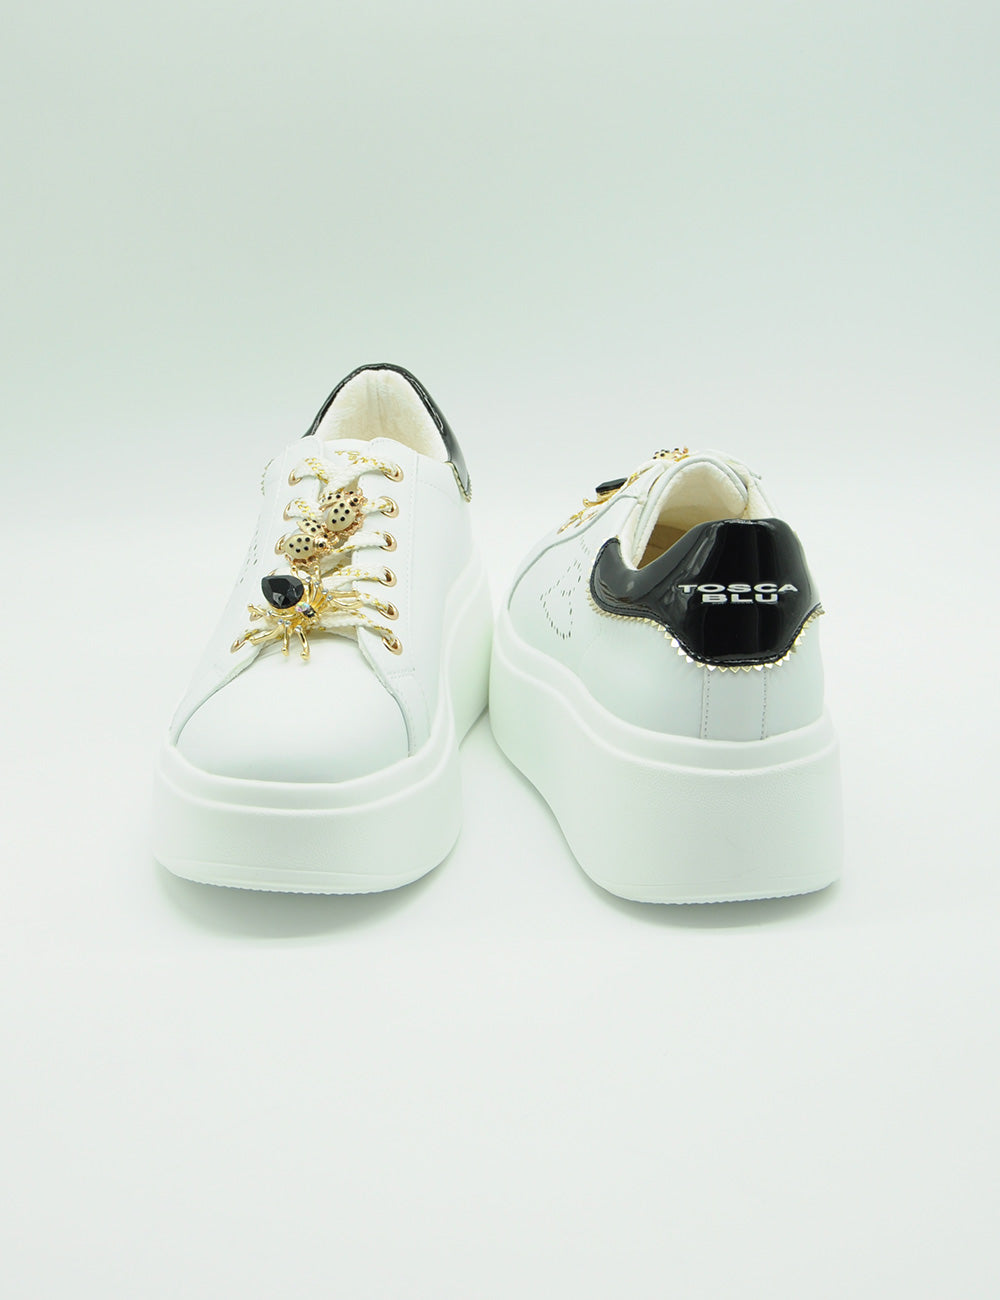 Tosca Blu White Vanity Sneaker